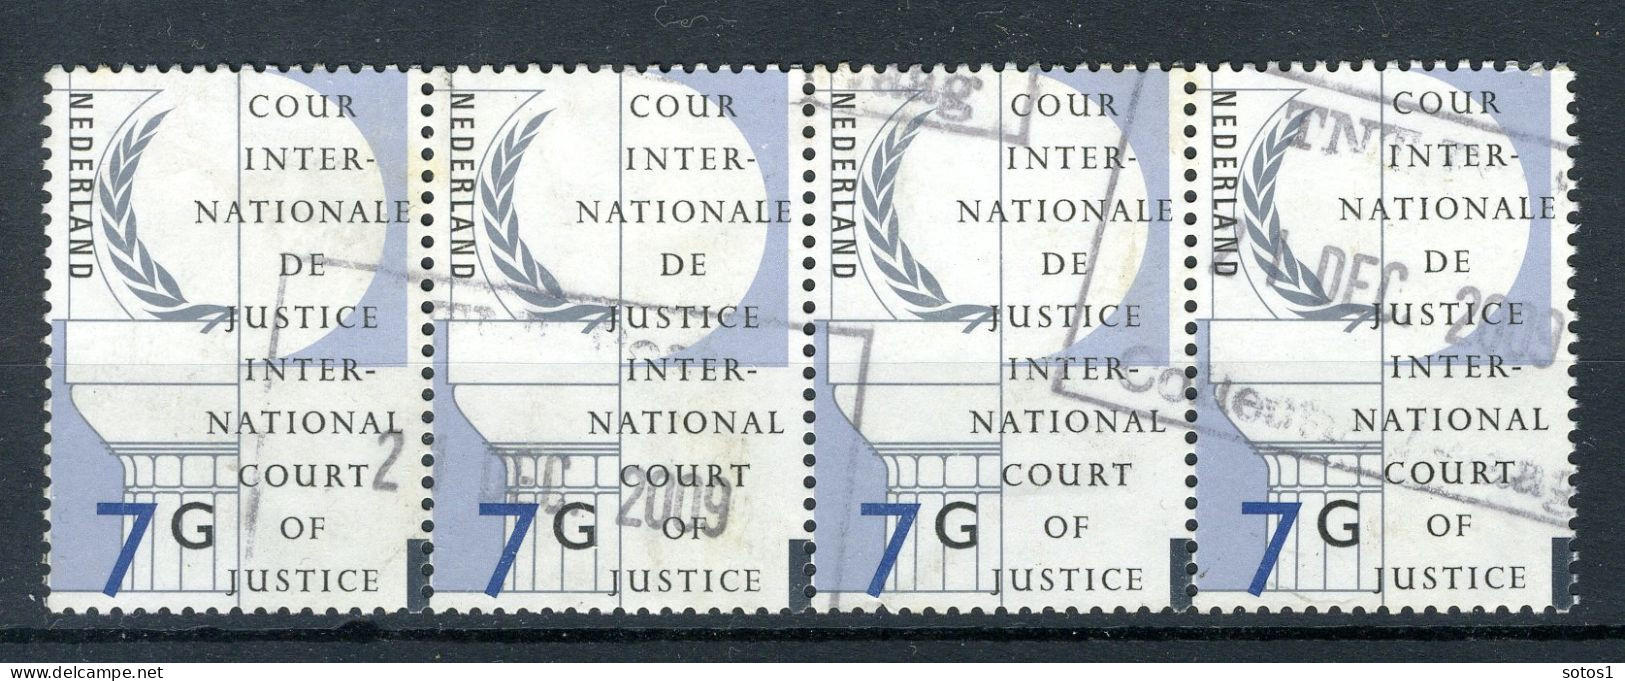 NEDERLAND D58 Gestempeld 1989-1994 (4 Stuks) - Officials